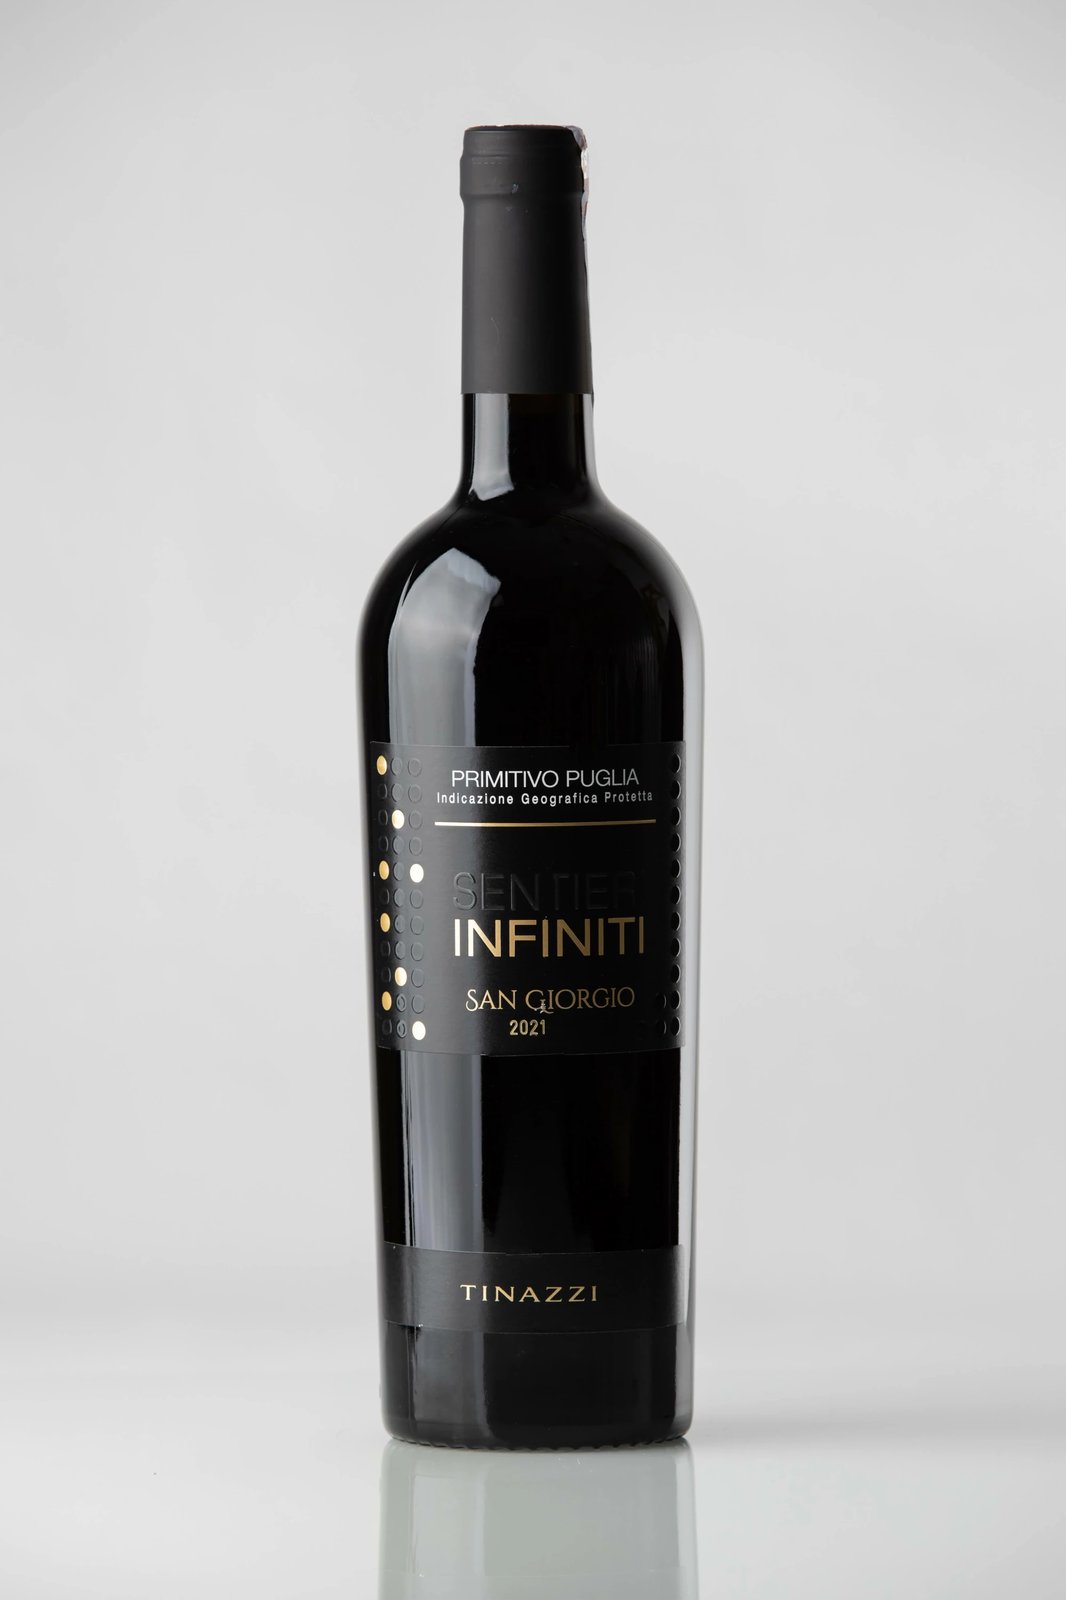 Verë e kuqe, Tinazzi Sentieri Infiniti Puglia 2021 (Primitivo)